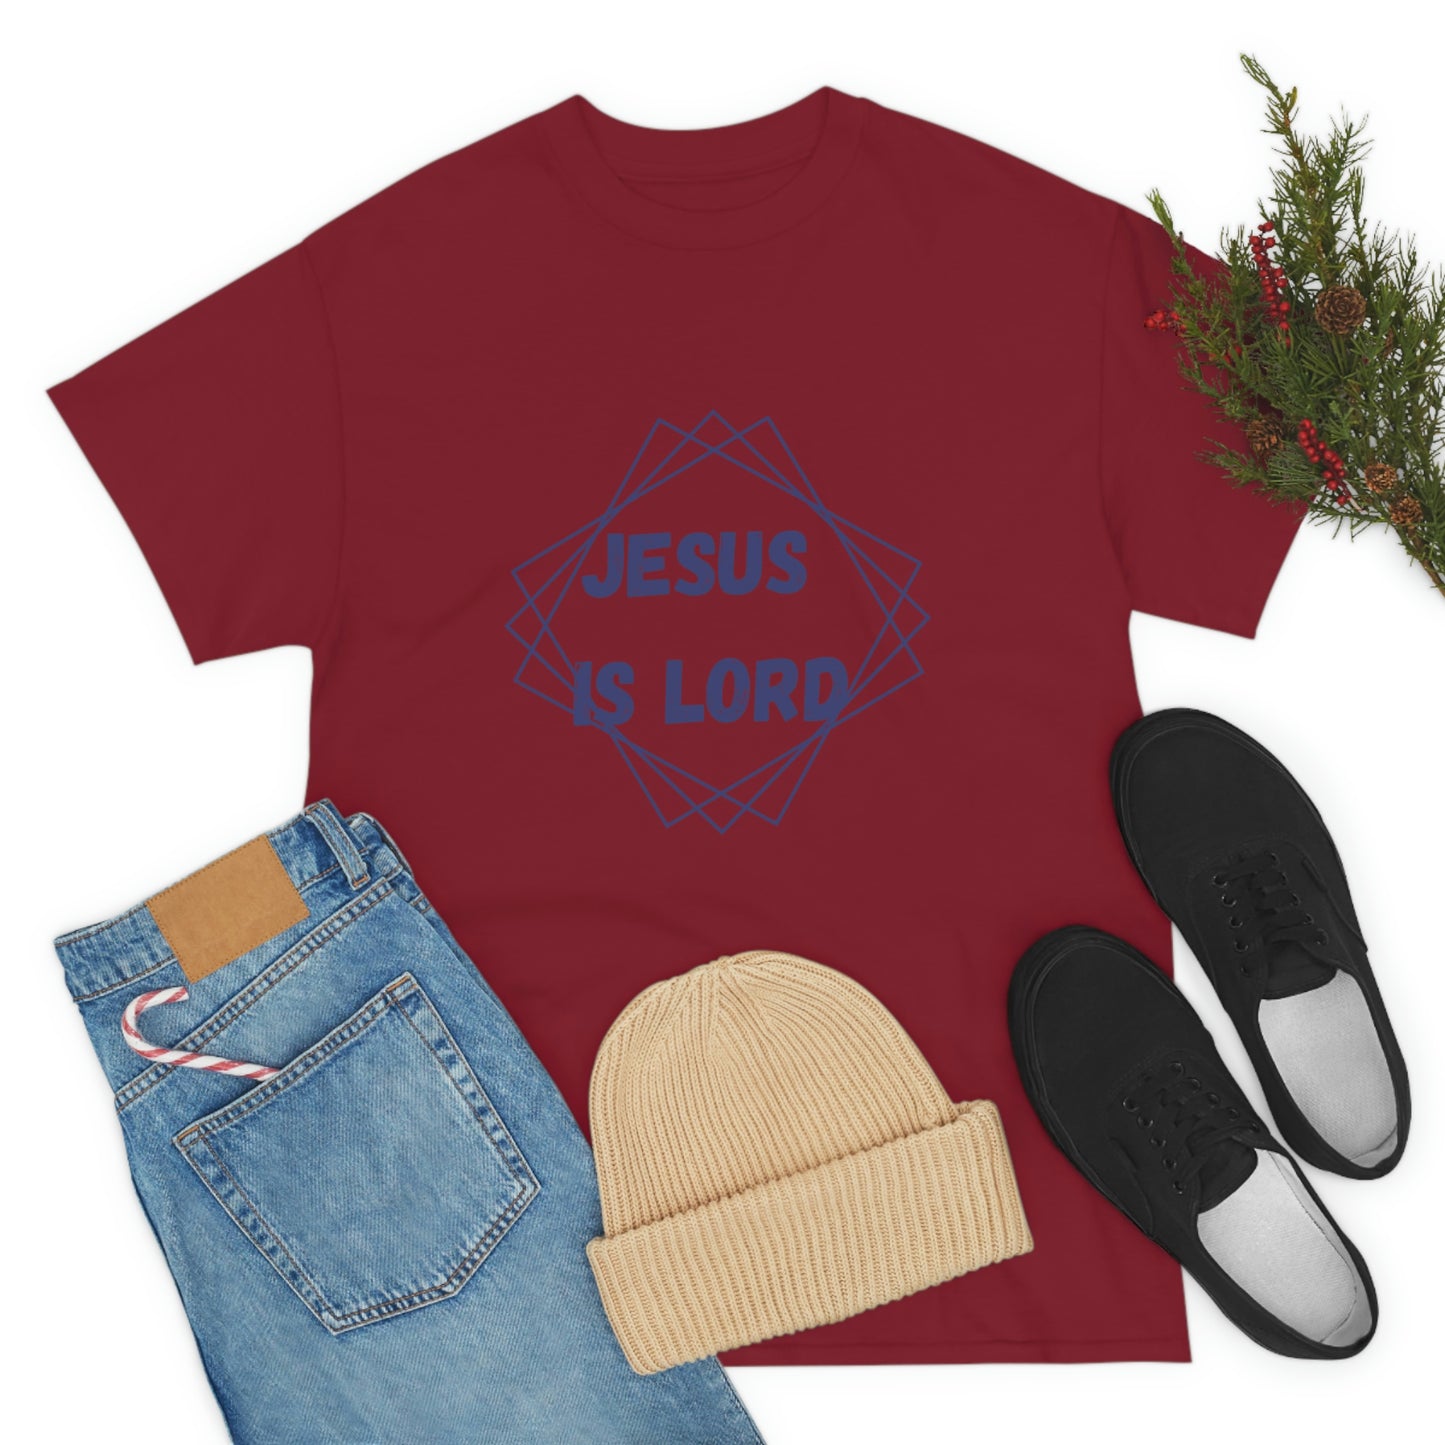 Jesus is Lord - Men's Christian Cotton Tee